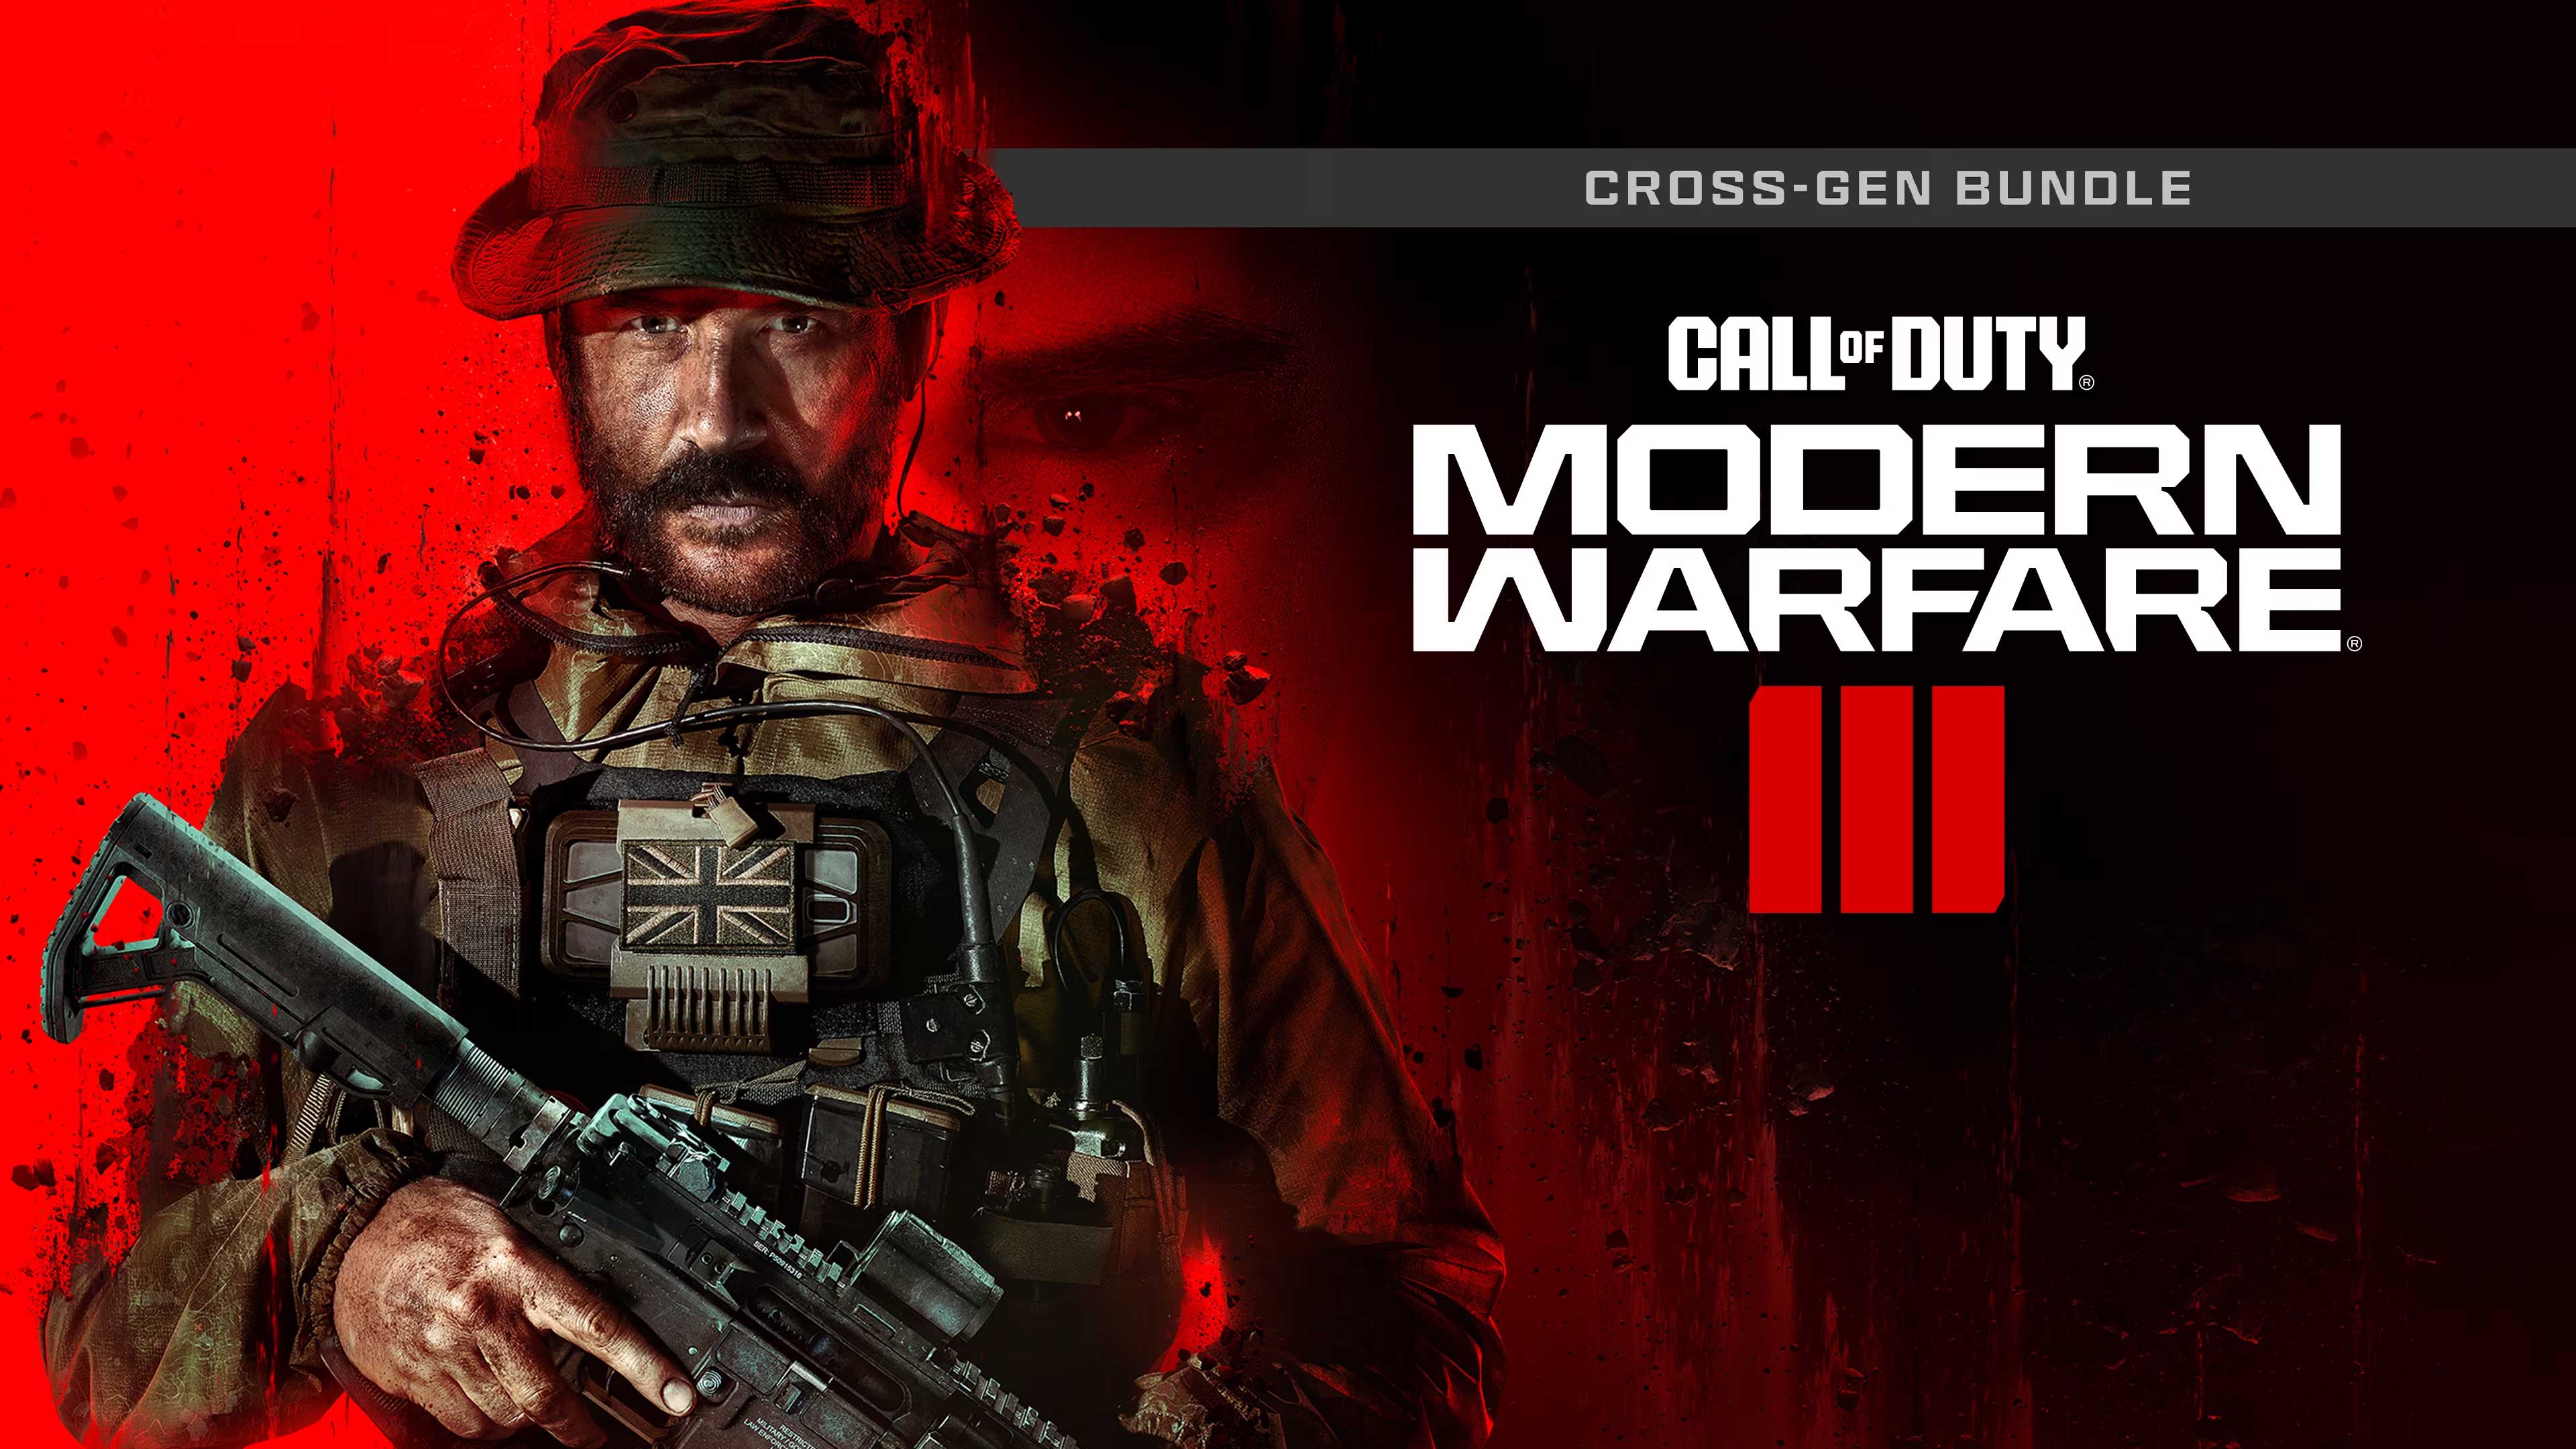 Call of Duty: Modern Warfare III - Cross-Gen Bundle, Road to Video Games, roadtovideogames.com